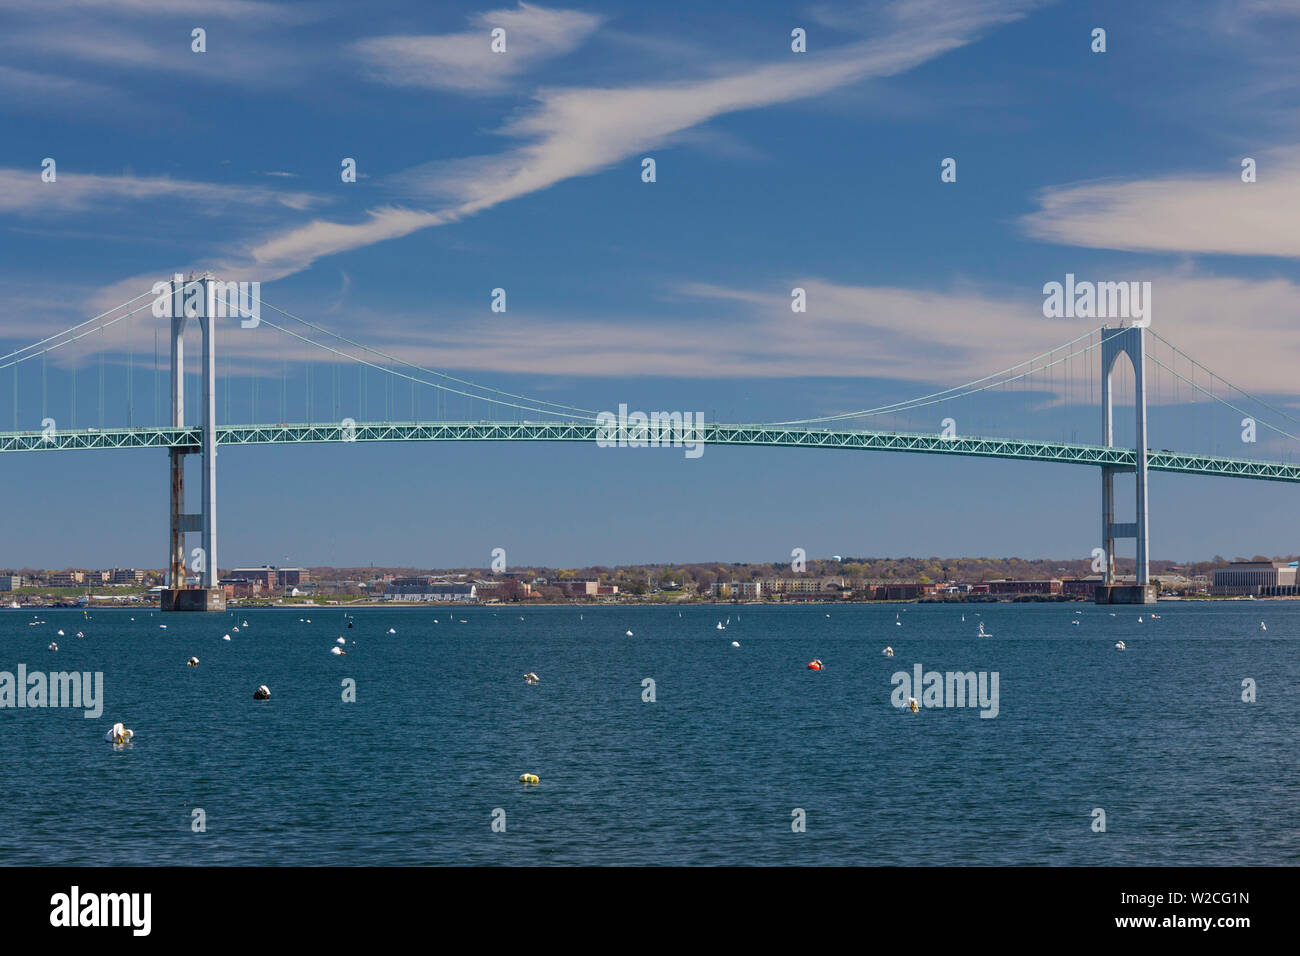 USA, Rhode Island, Jamestown, view of the Newport Bridge Stock Photo